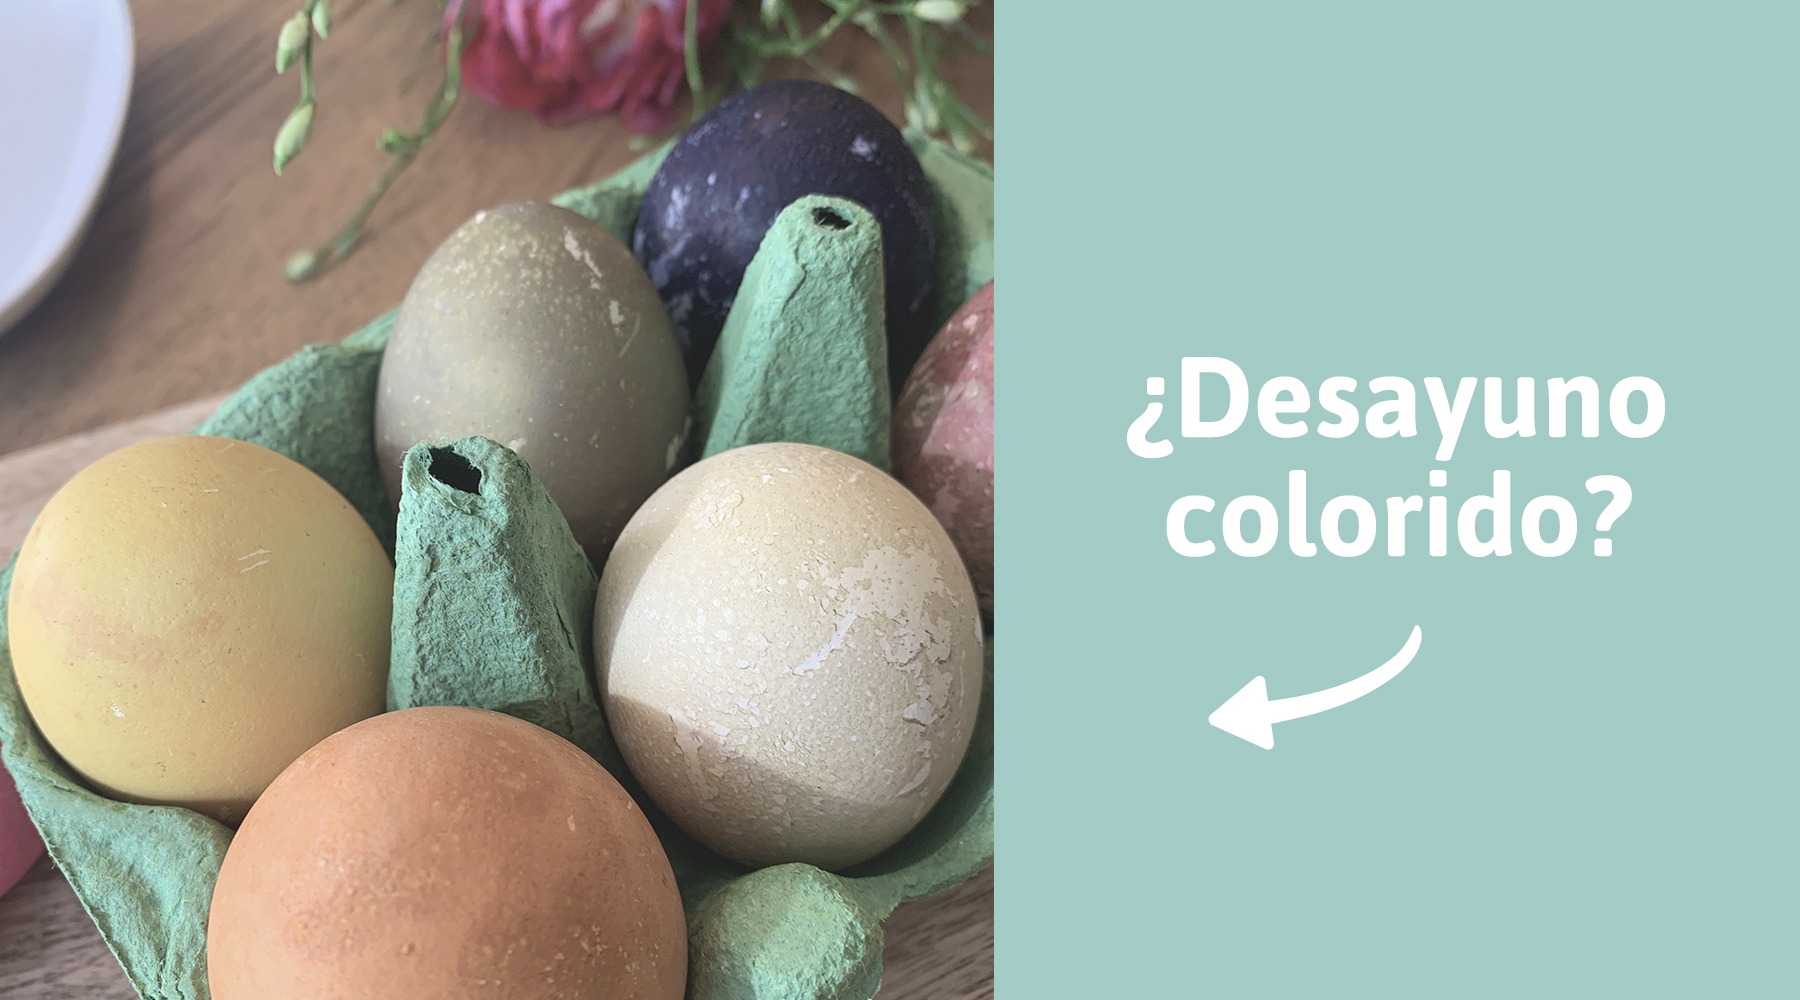 Para colorear huevos de forma natural: